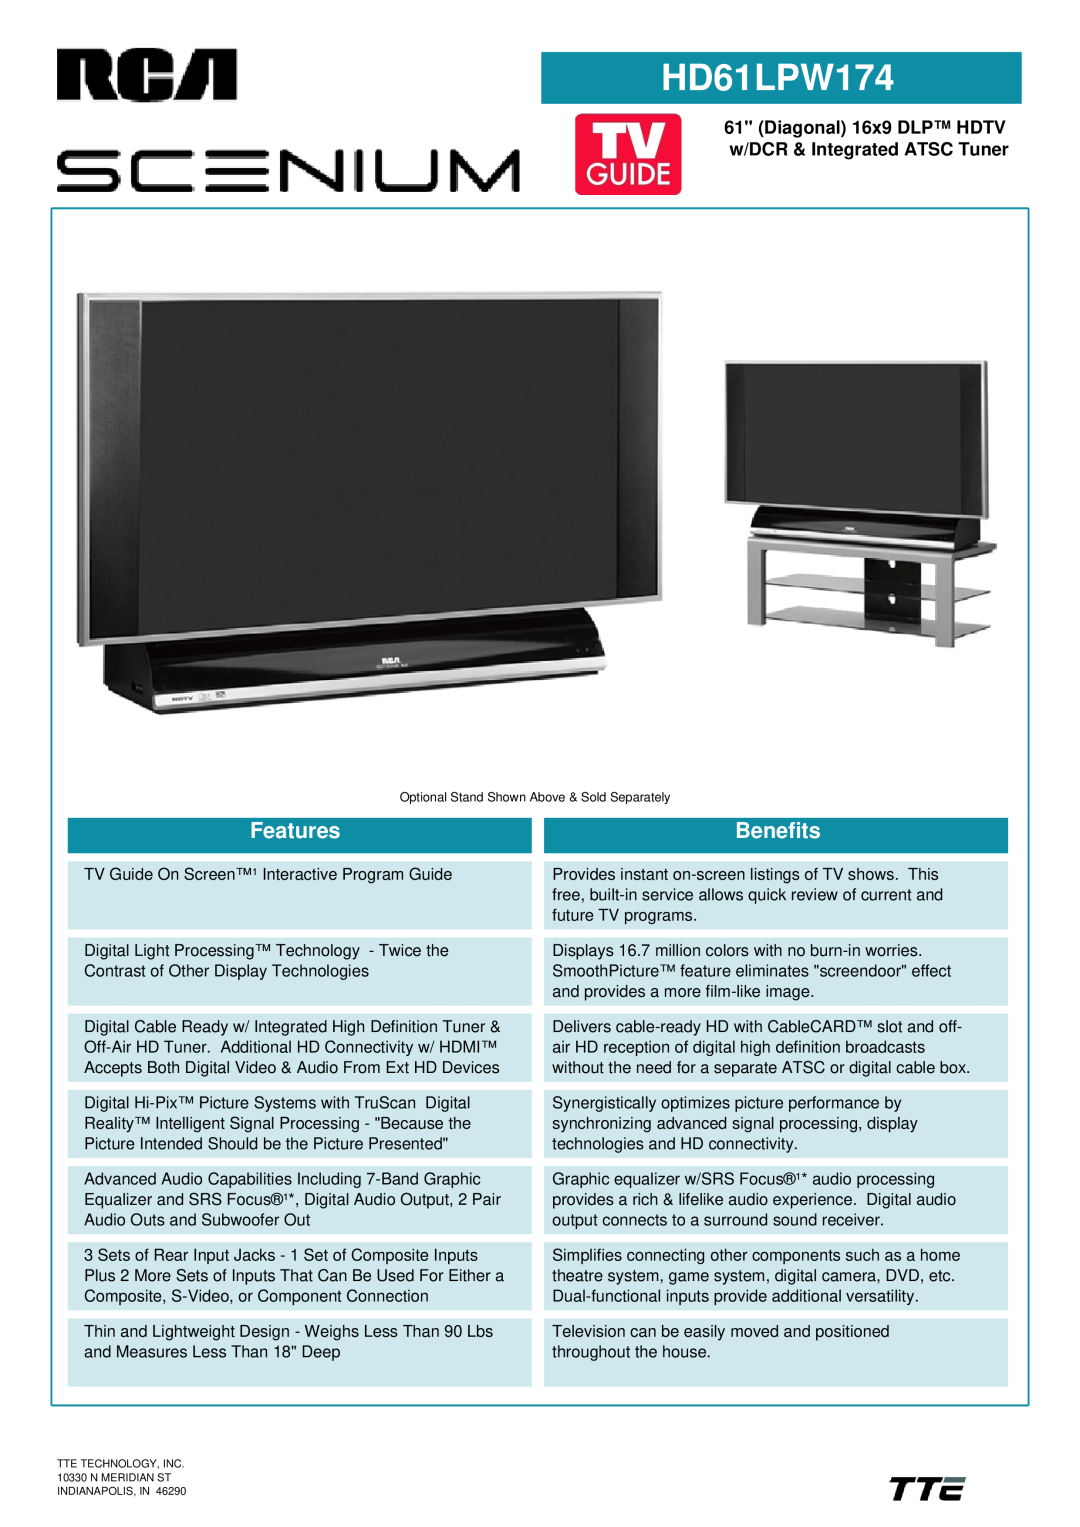 RCA HD61LPW174 manual Diagonal 16x9 DLP HDTV w/DCR & Integrated ATSC Tuner, Features, Benefits 